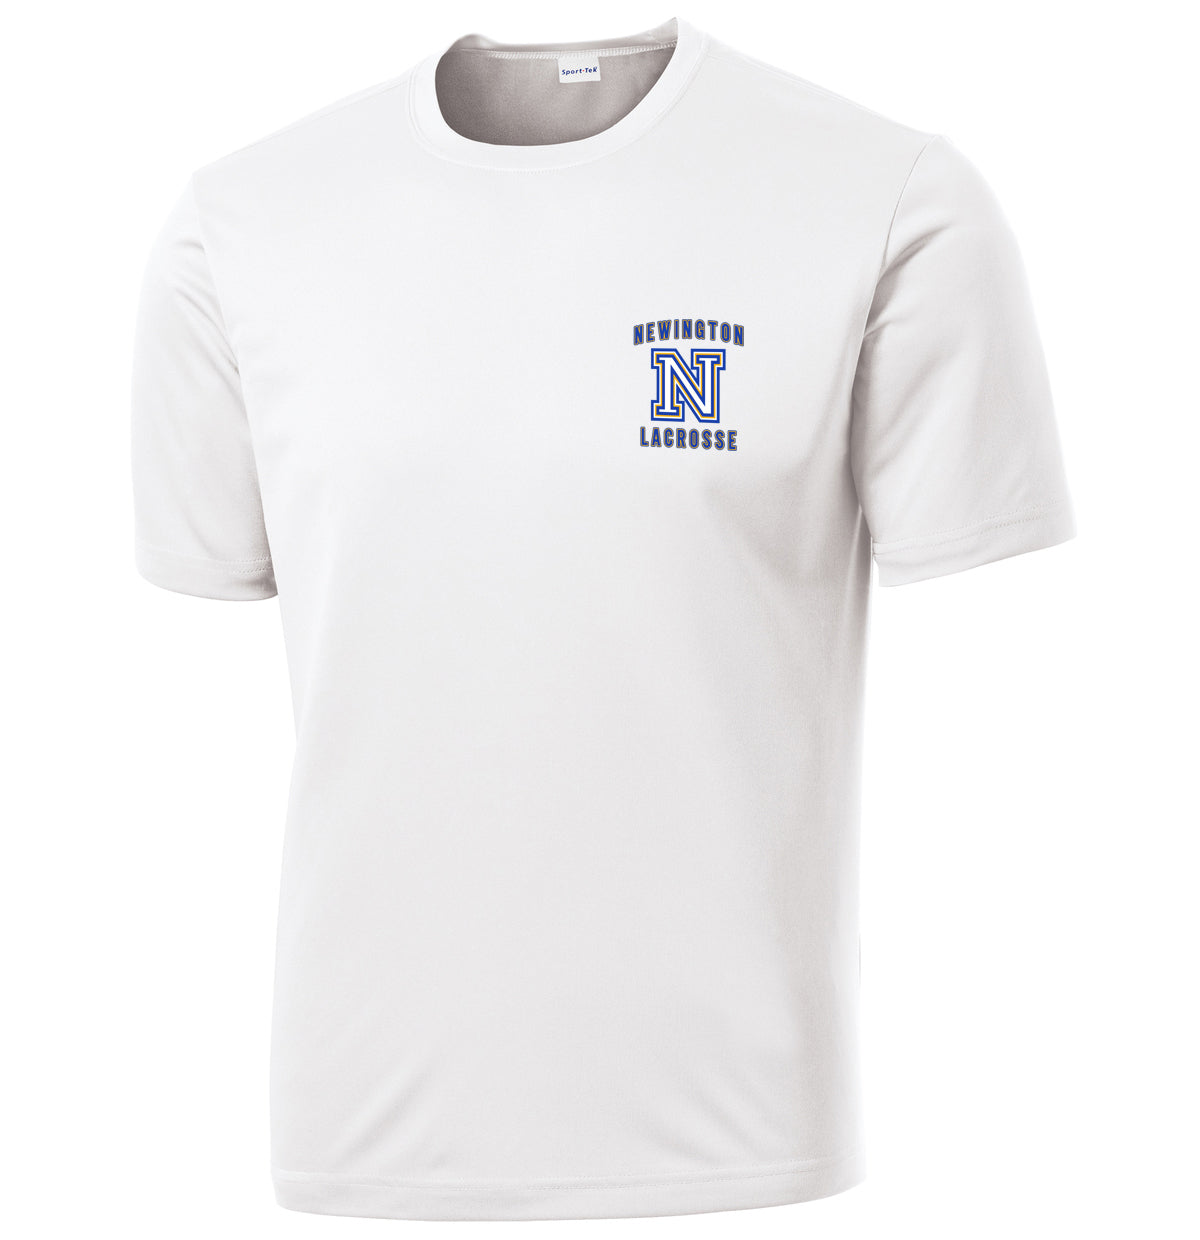 Newington Lacrosse White Performance T-Shirt